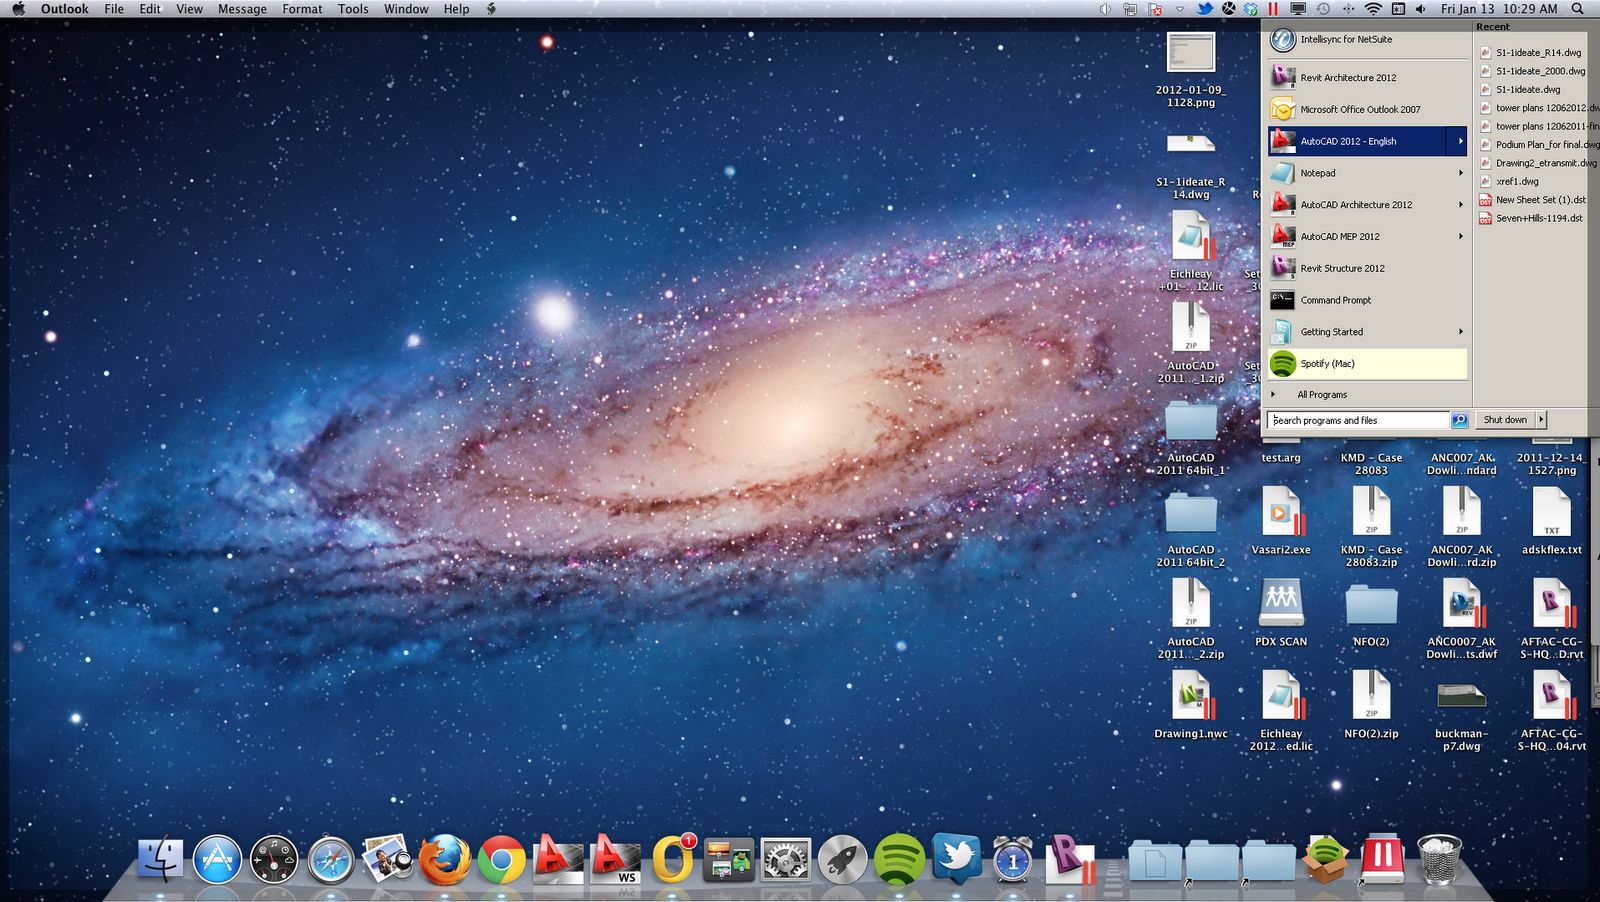 Mac os x 10.6.8 upgrade to 10.7